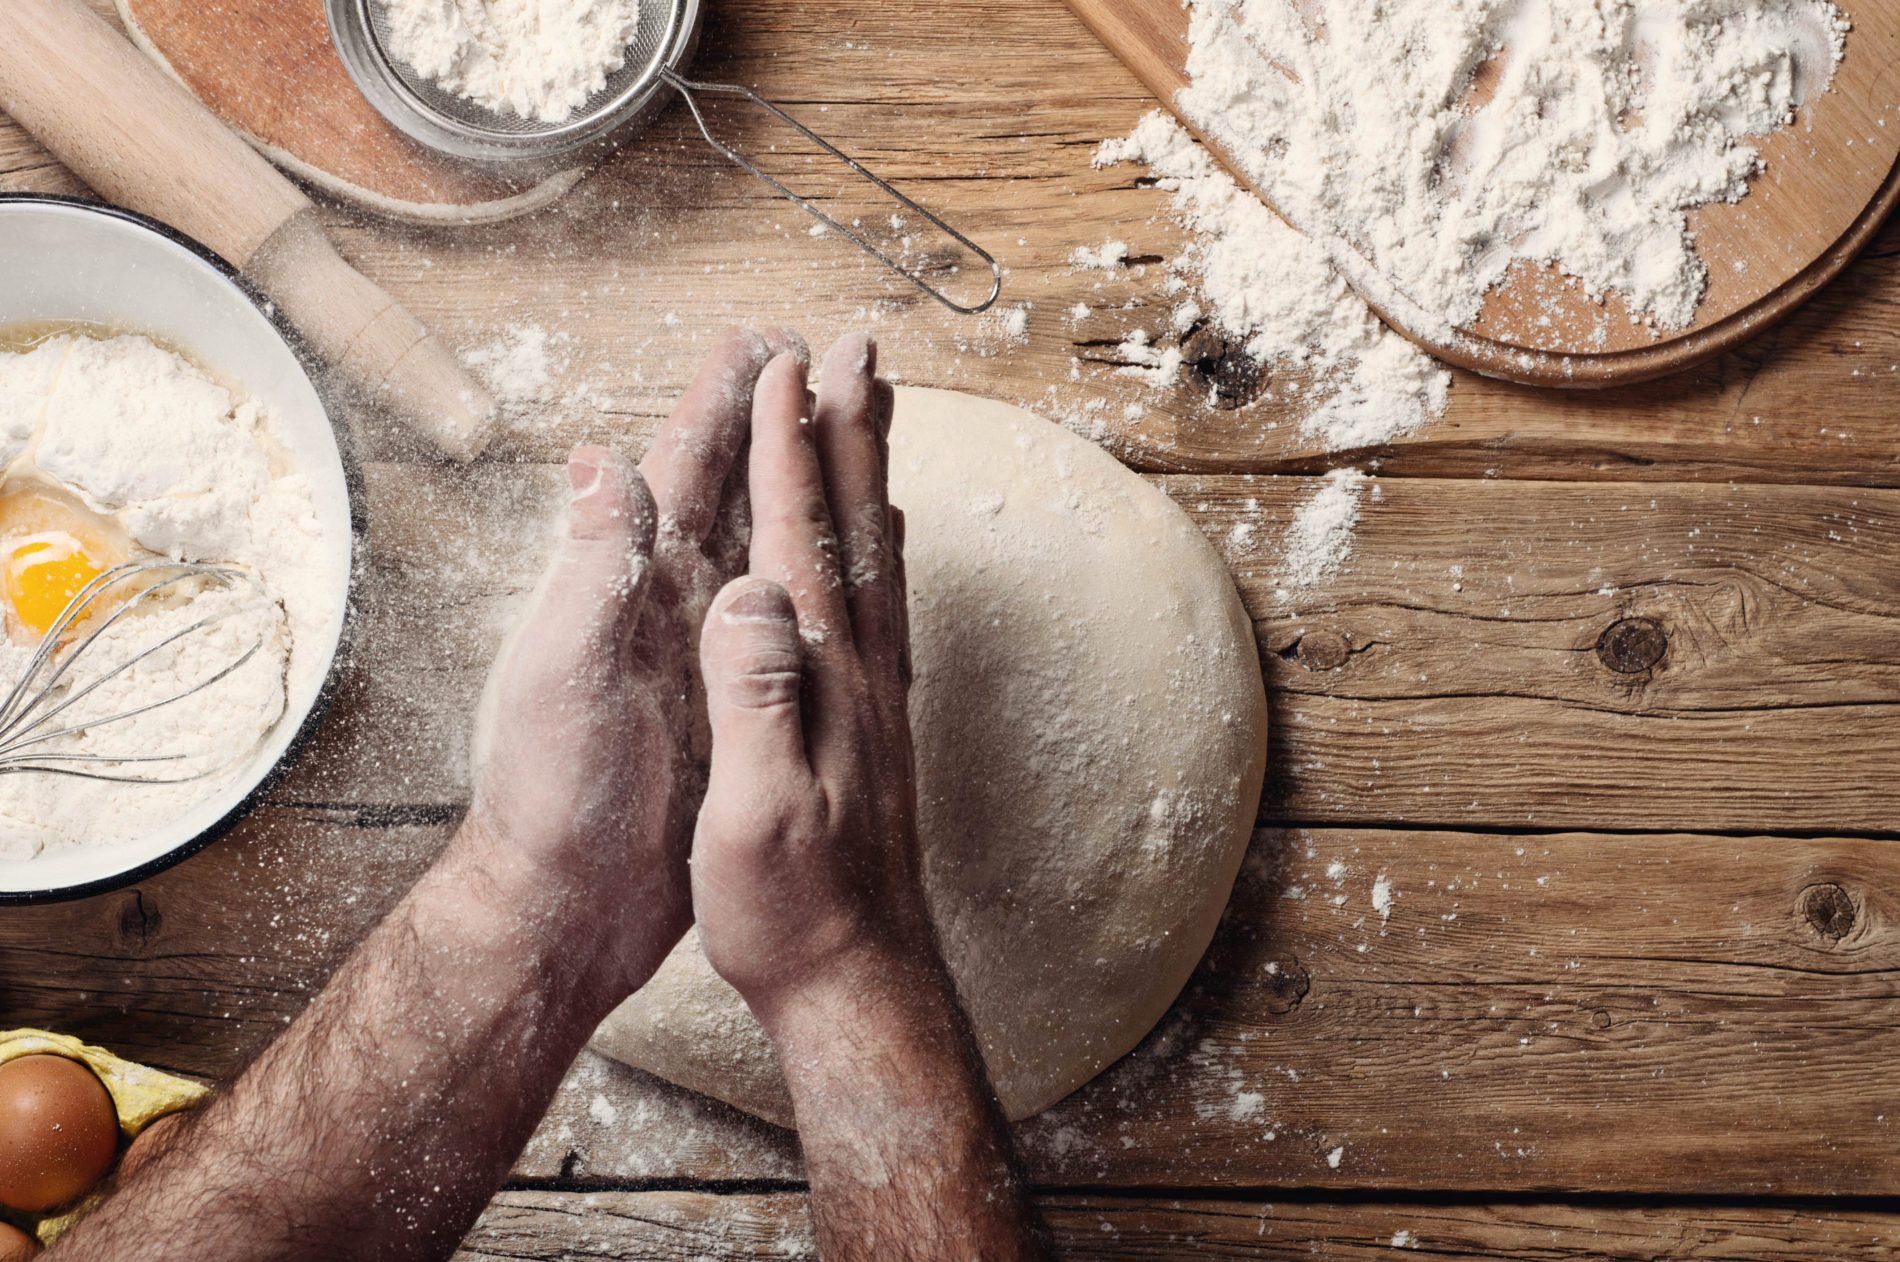 A man's hands dusting flour on a dough ball